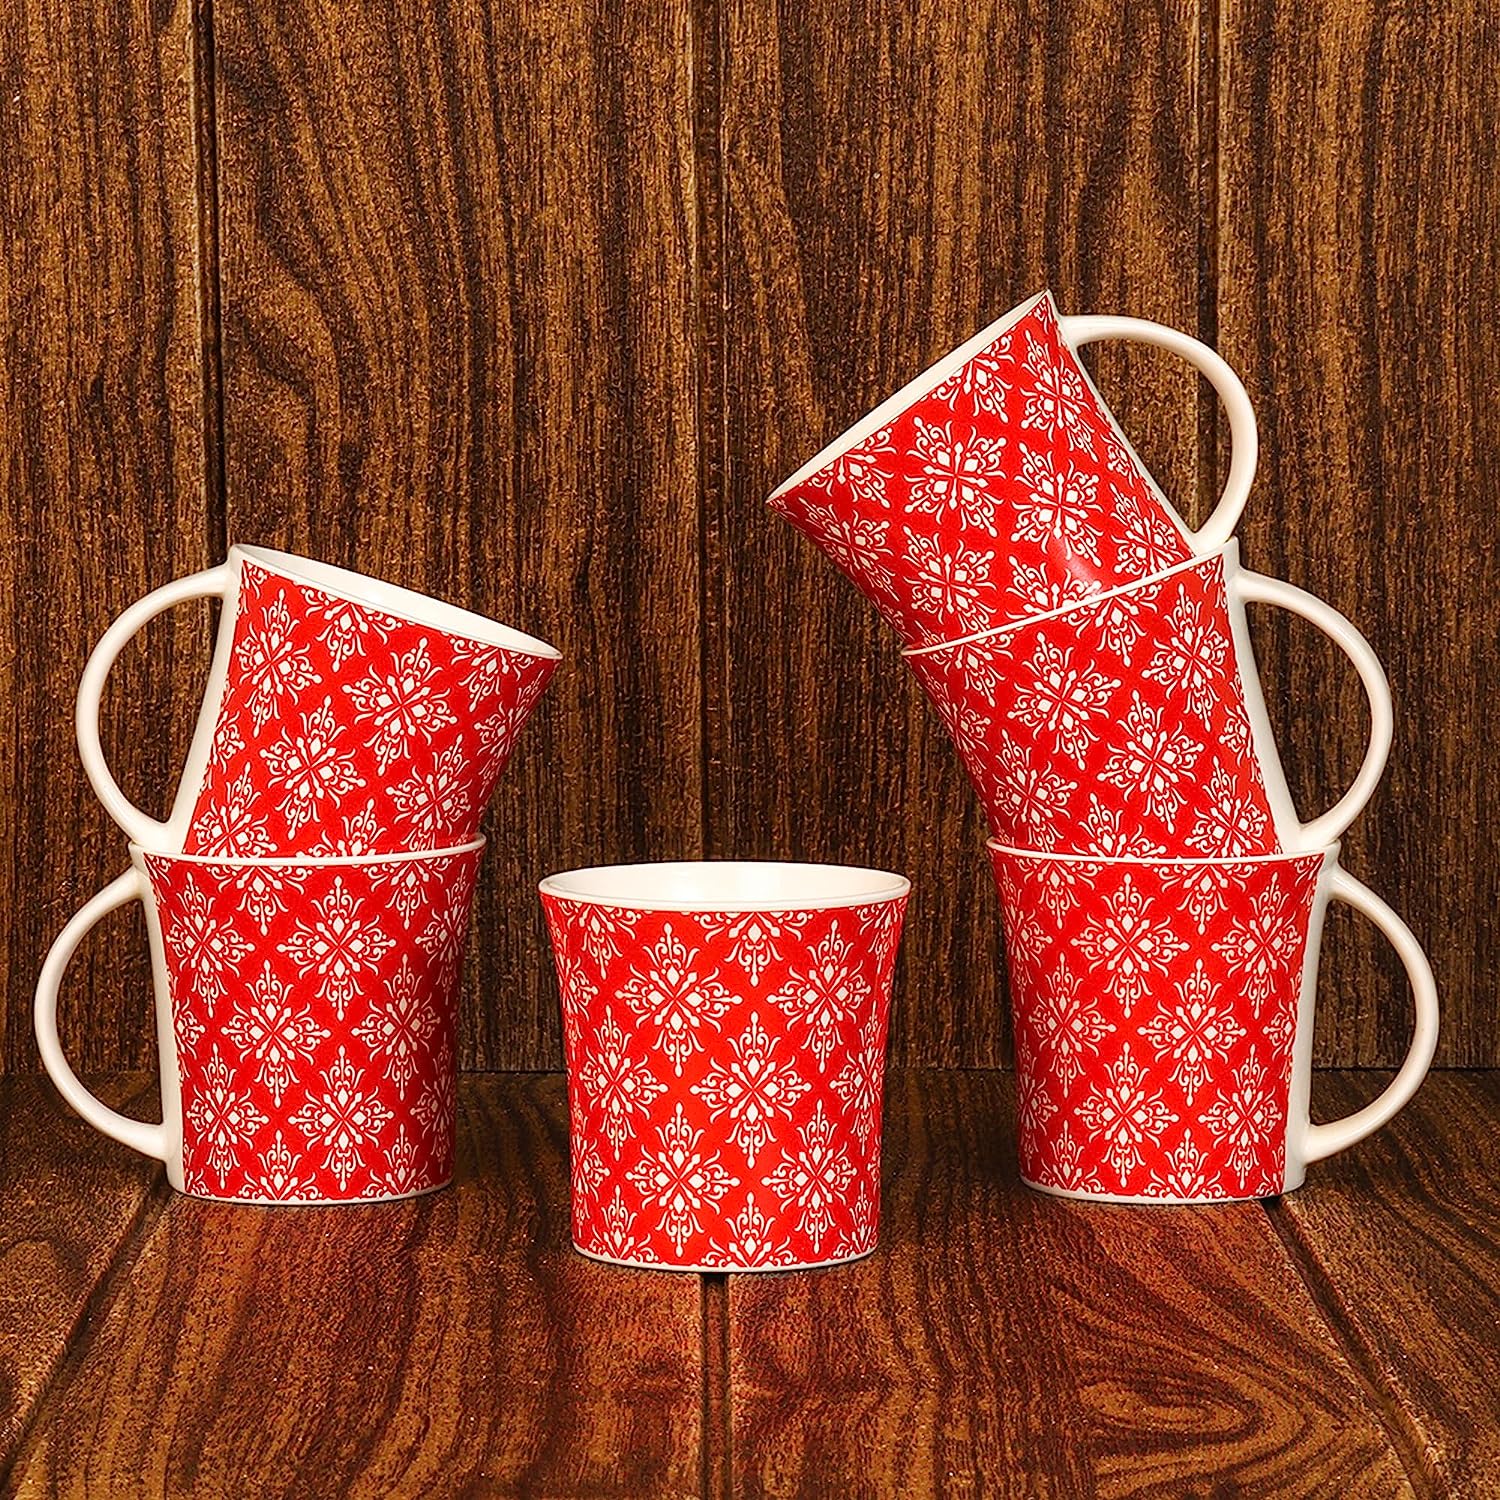 Femora Arabesque Flower Pattern Tea Cups, Ceramic Tea Cups, Coffee Mugs (160 ml) - 6 Pcs Set (Red)